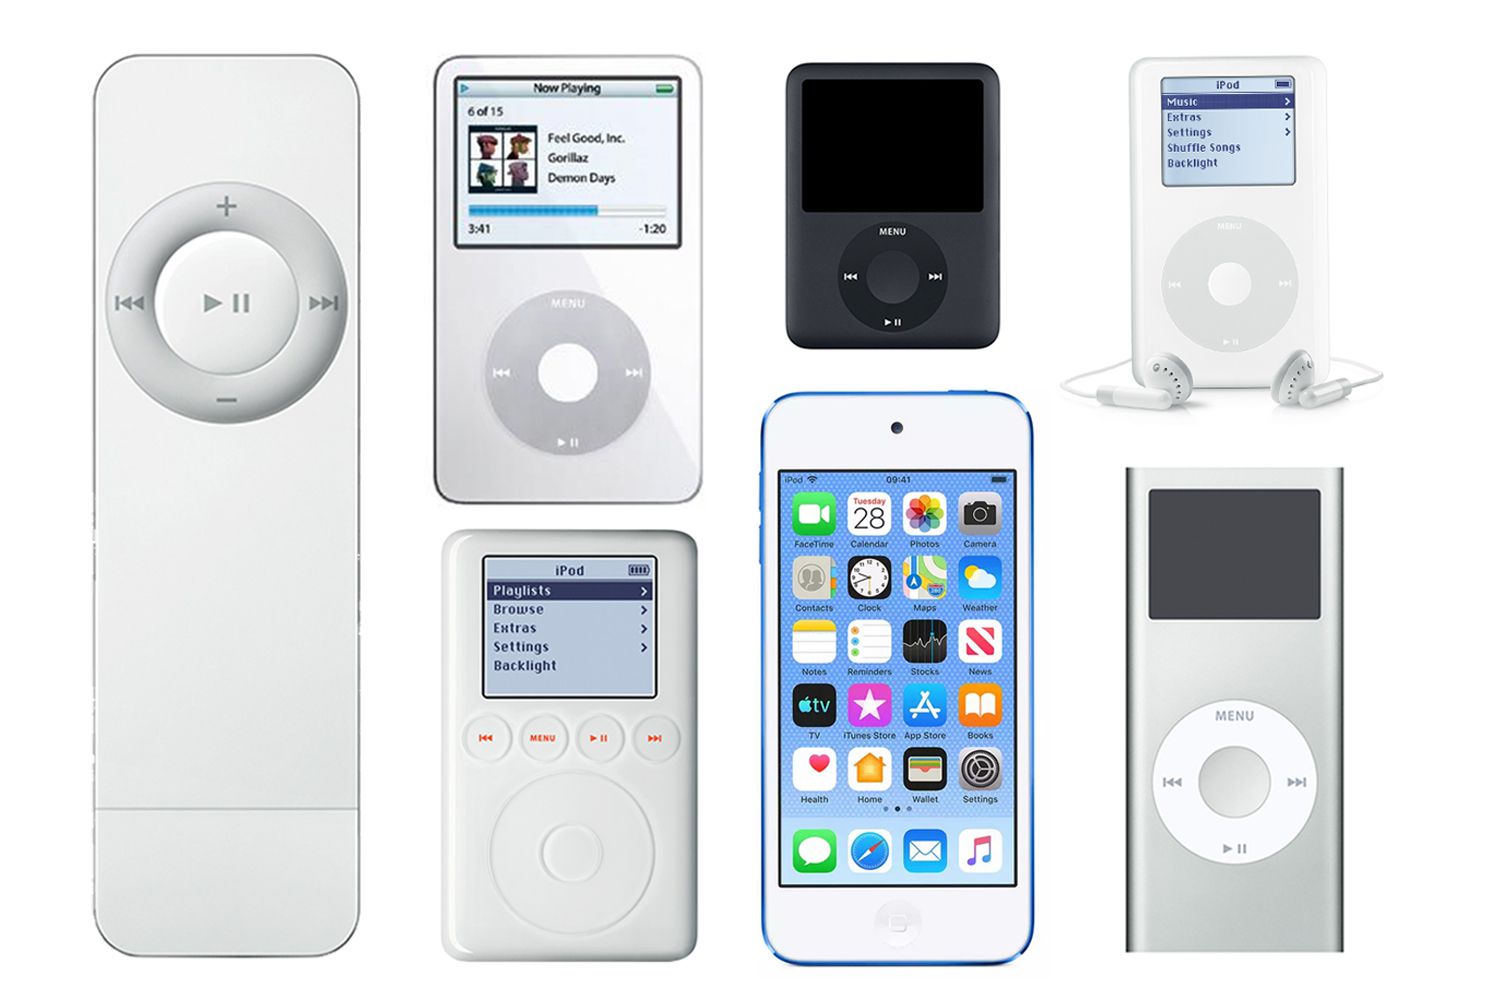 iPod models